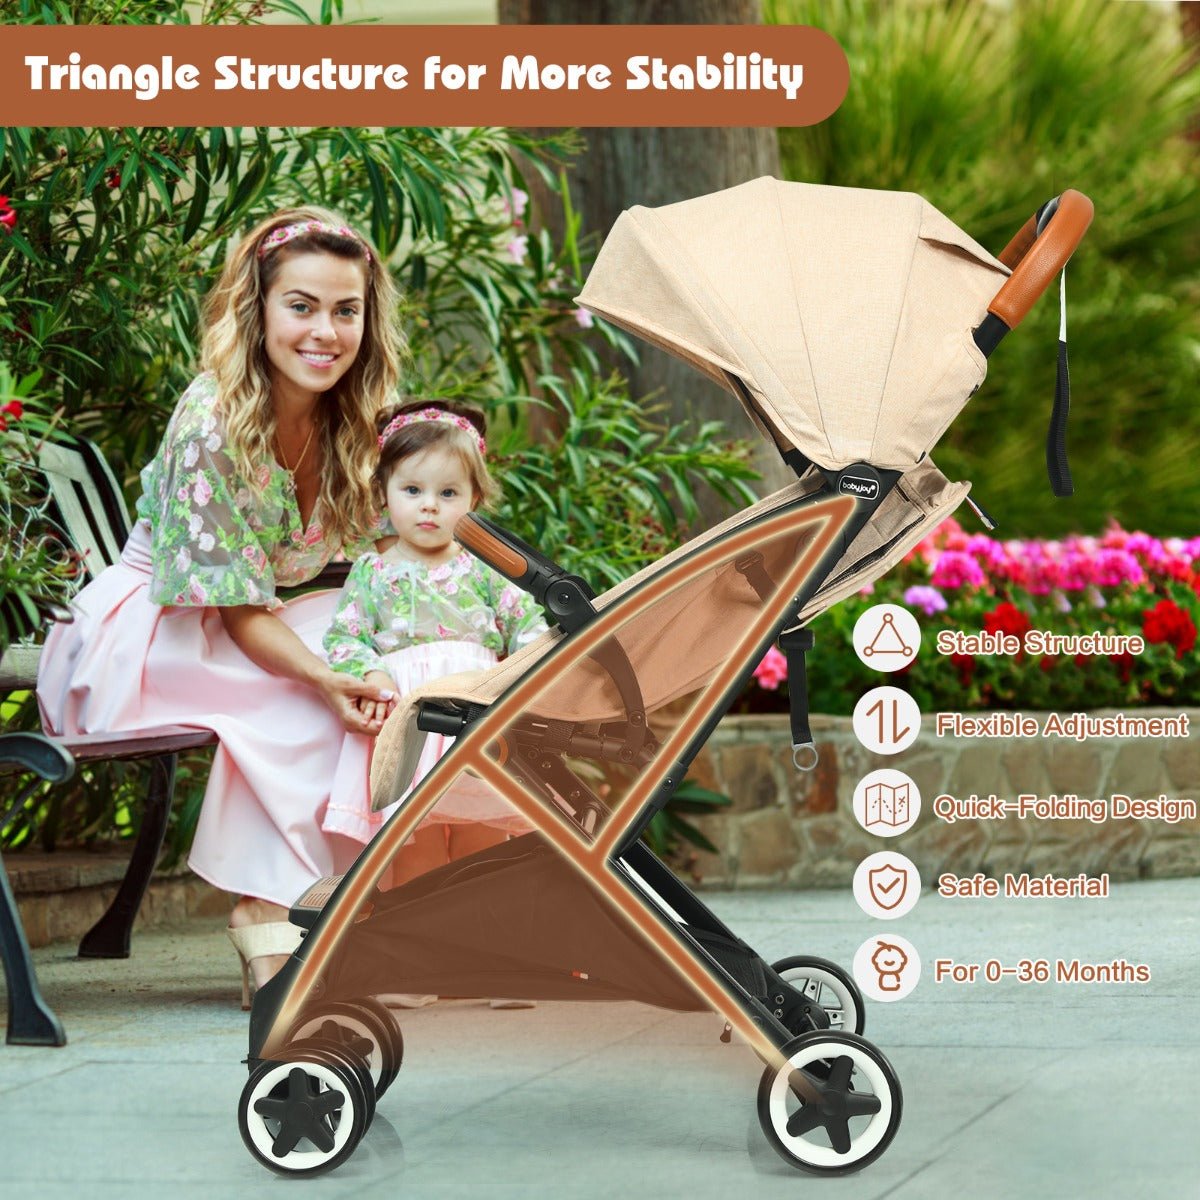 Beige Stroller: Smooth Rides with Adjustable Comfort